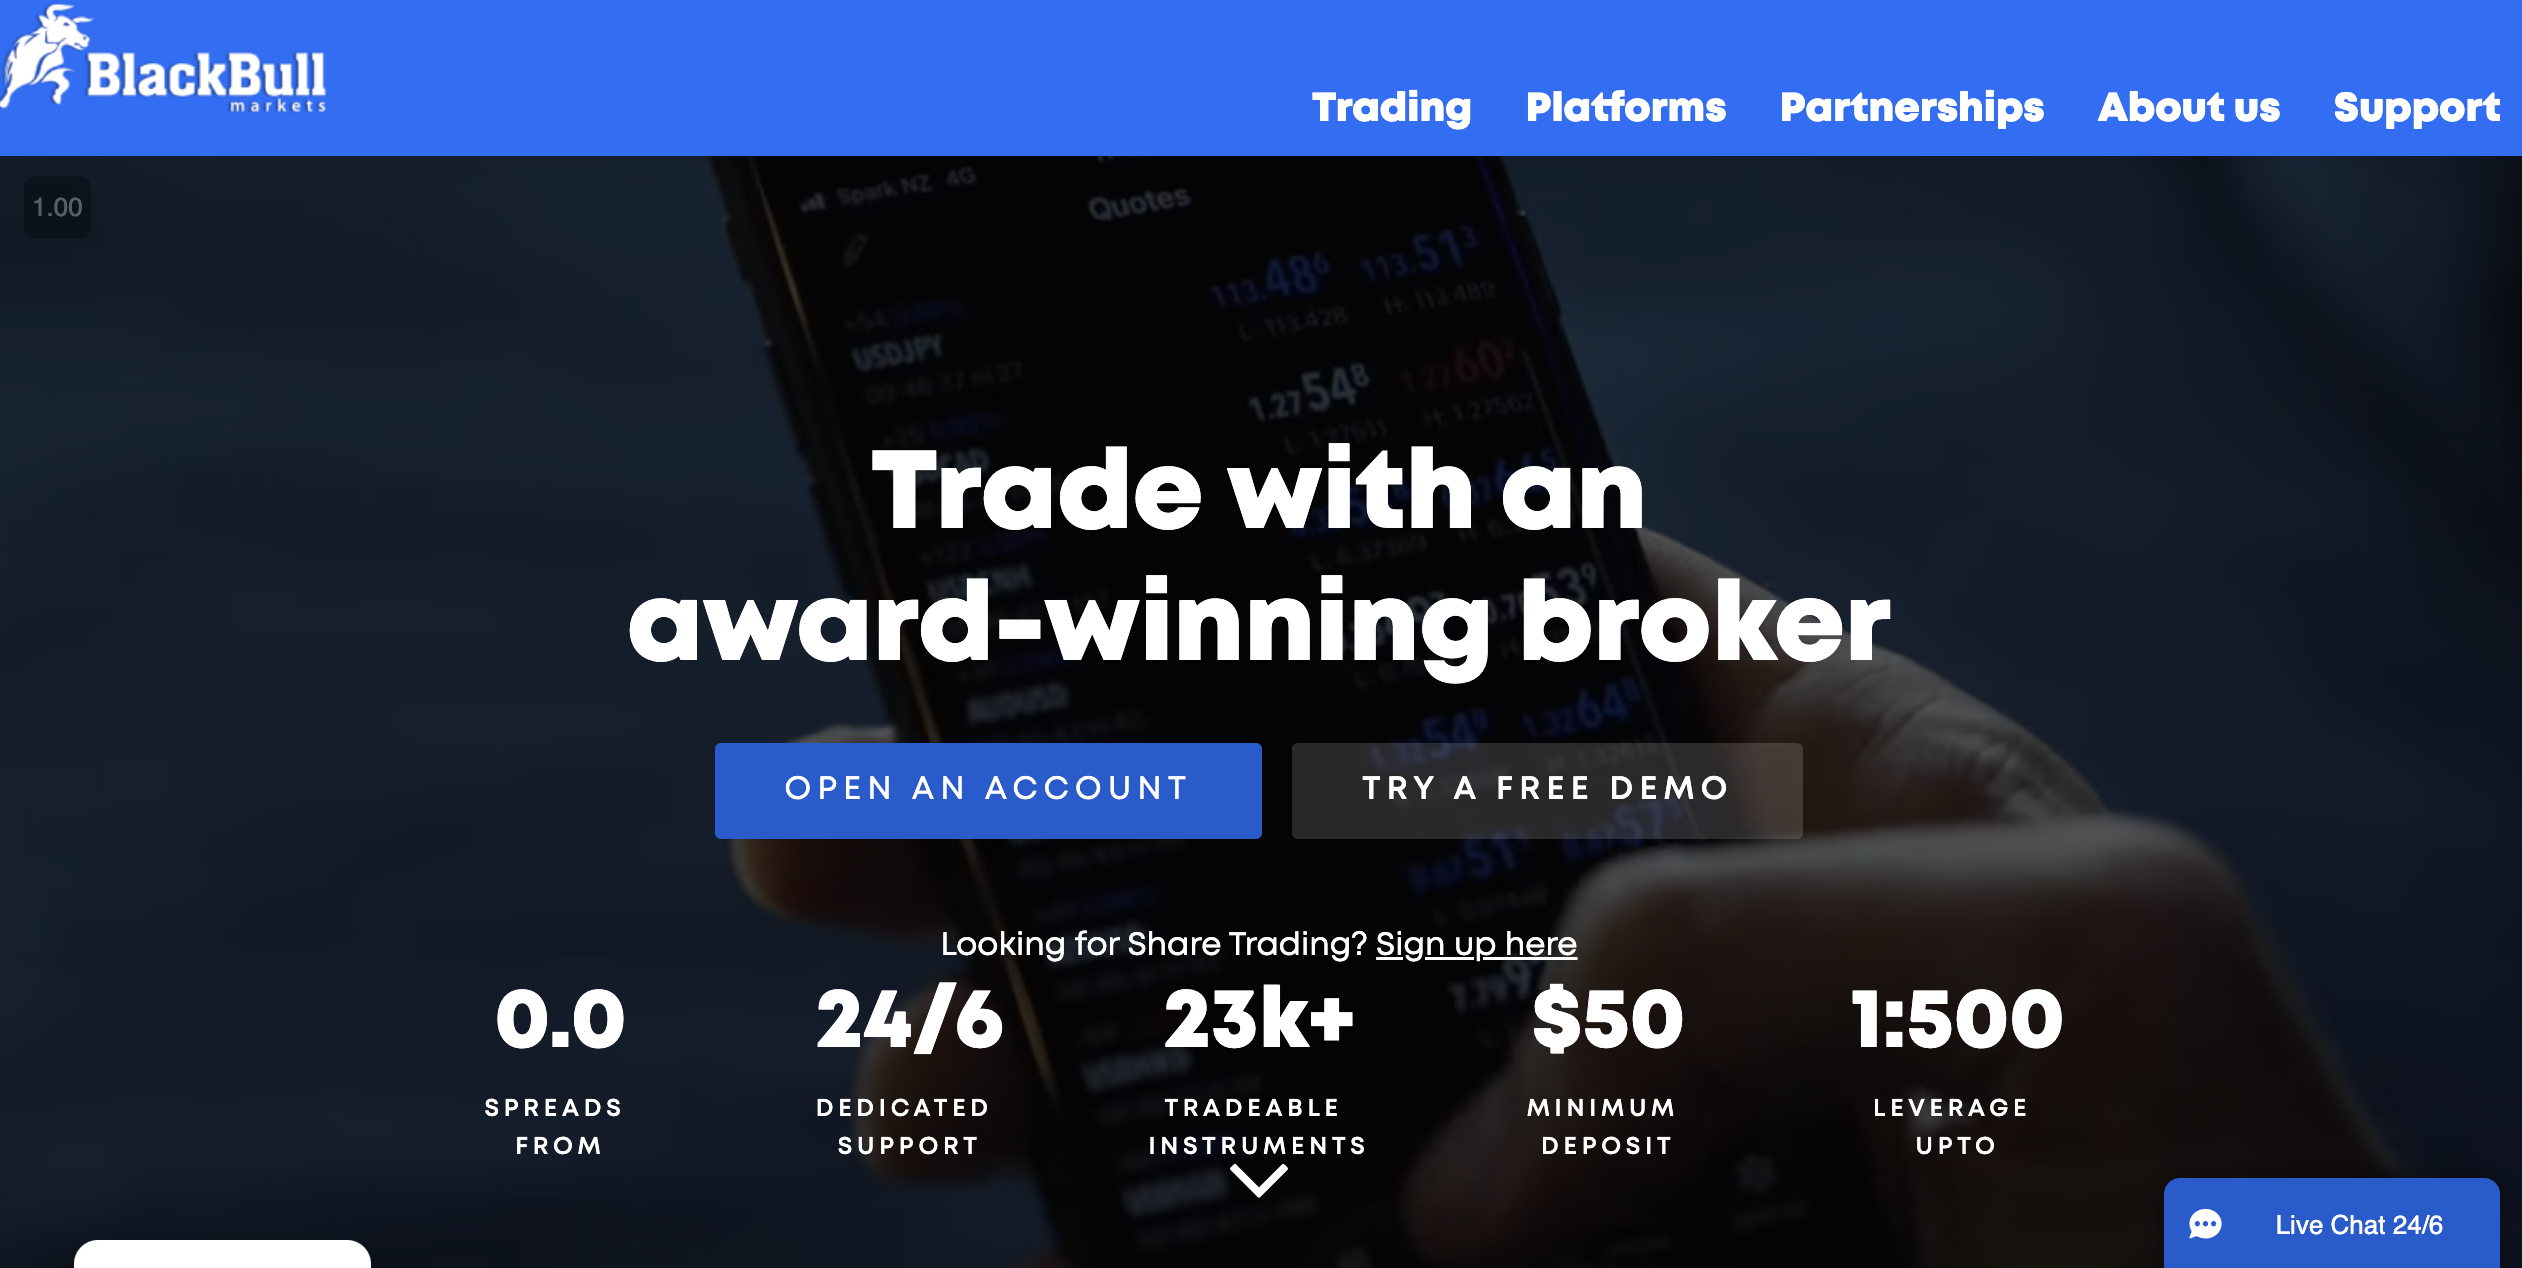 The official website of the Forex Broker BlackBull Markets